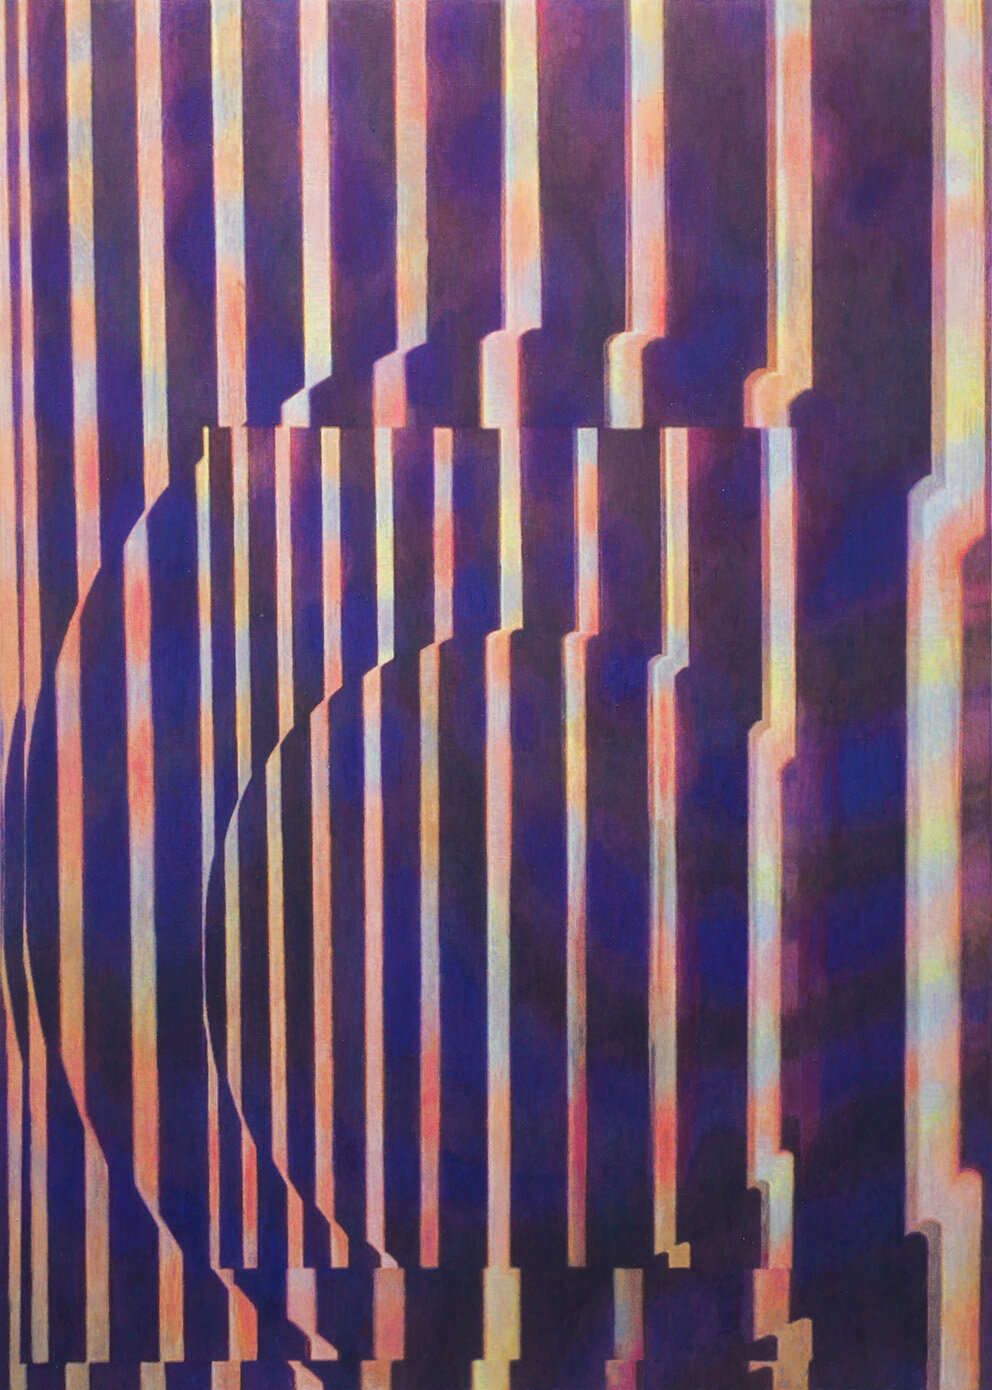  „Ohne Titel“, 2020, Aquarell und Kunstharze auf Leinwand, 140 x 100 cm  